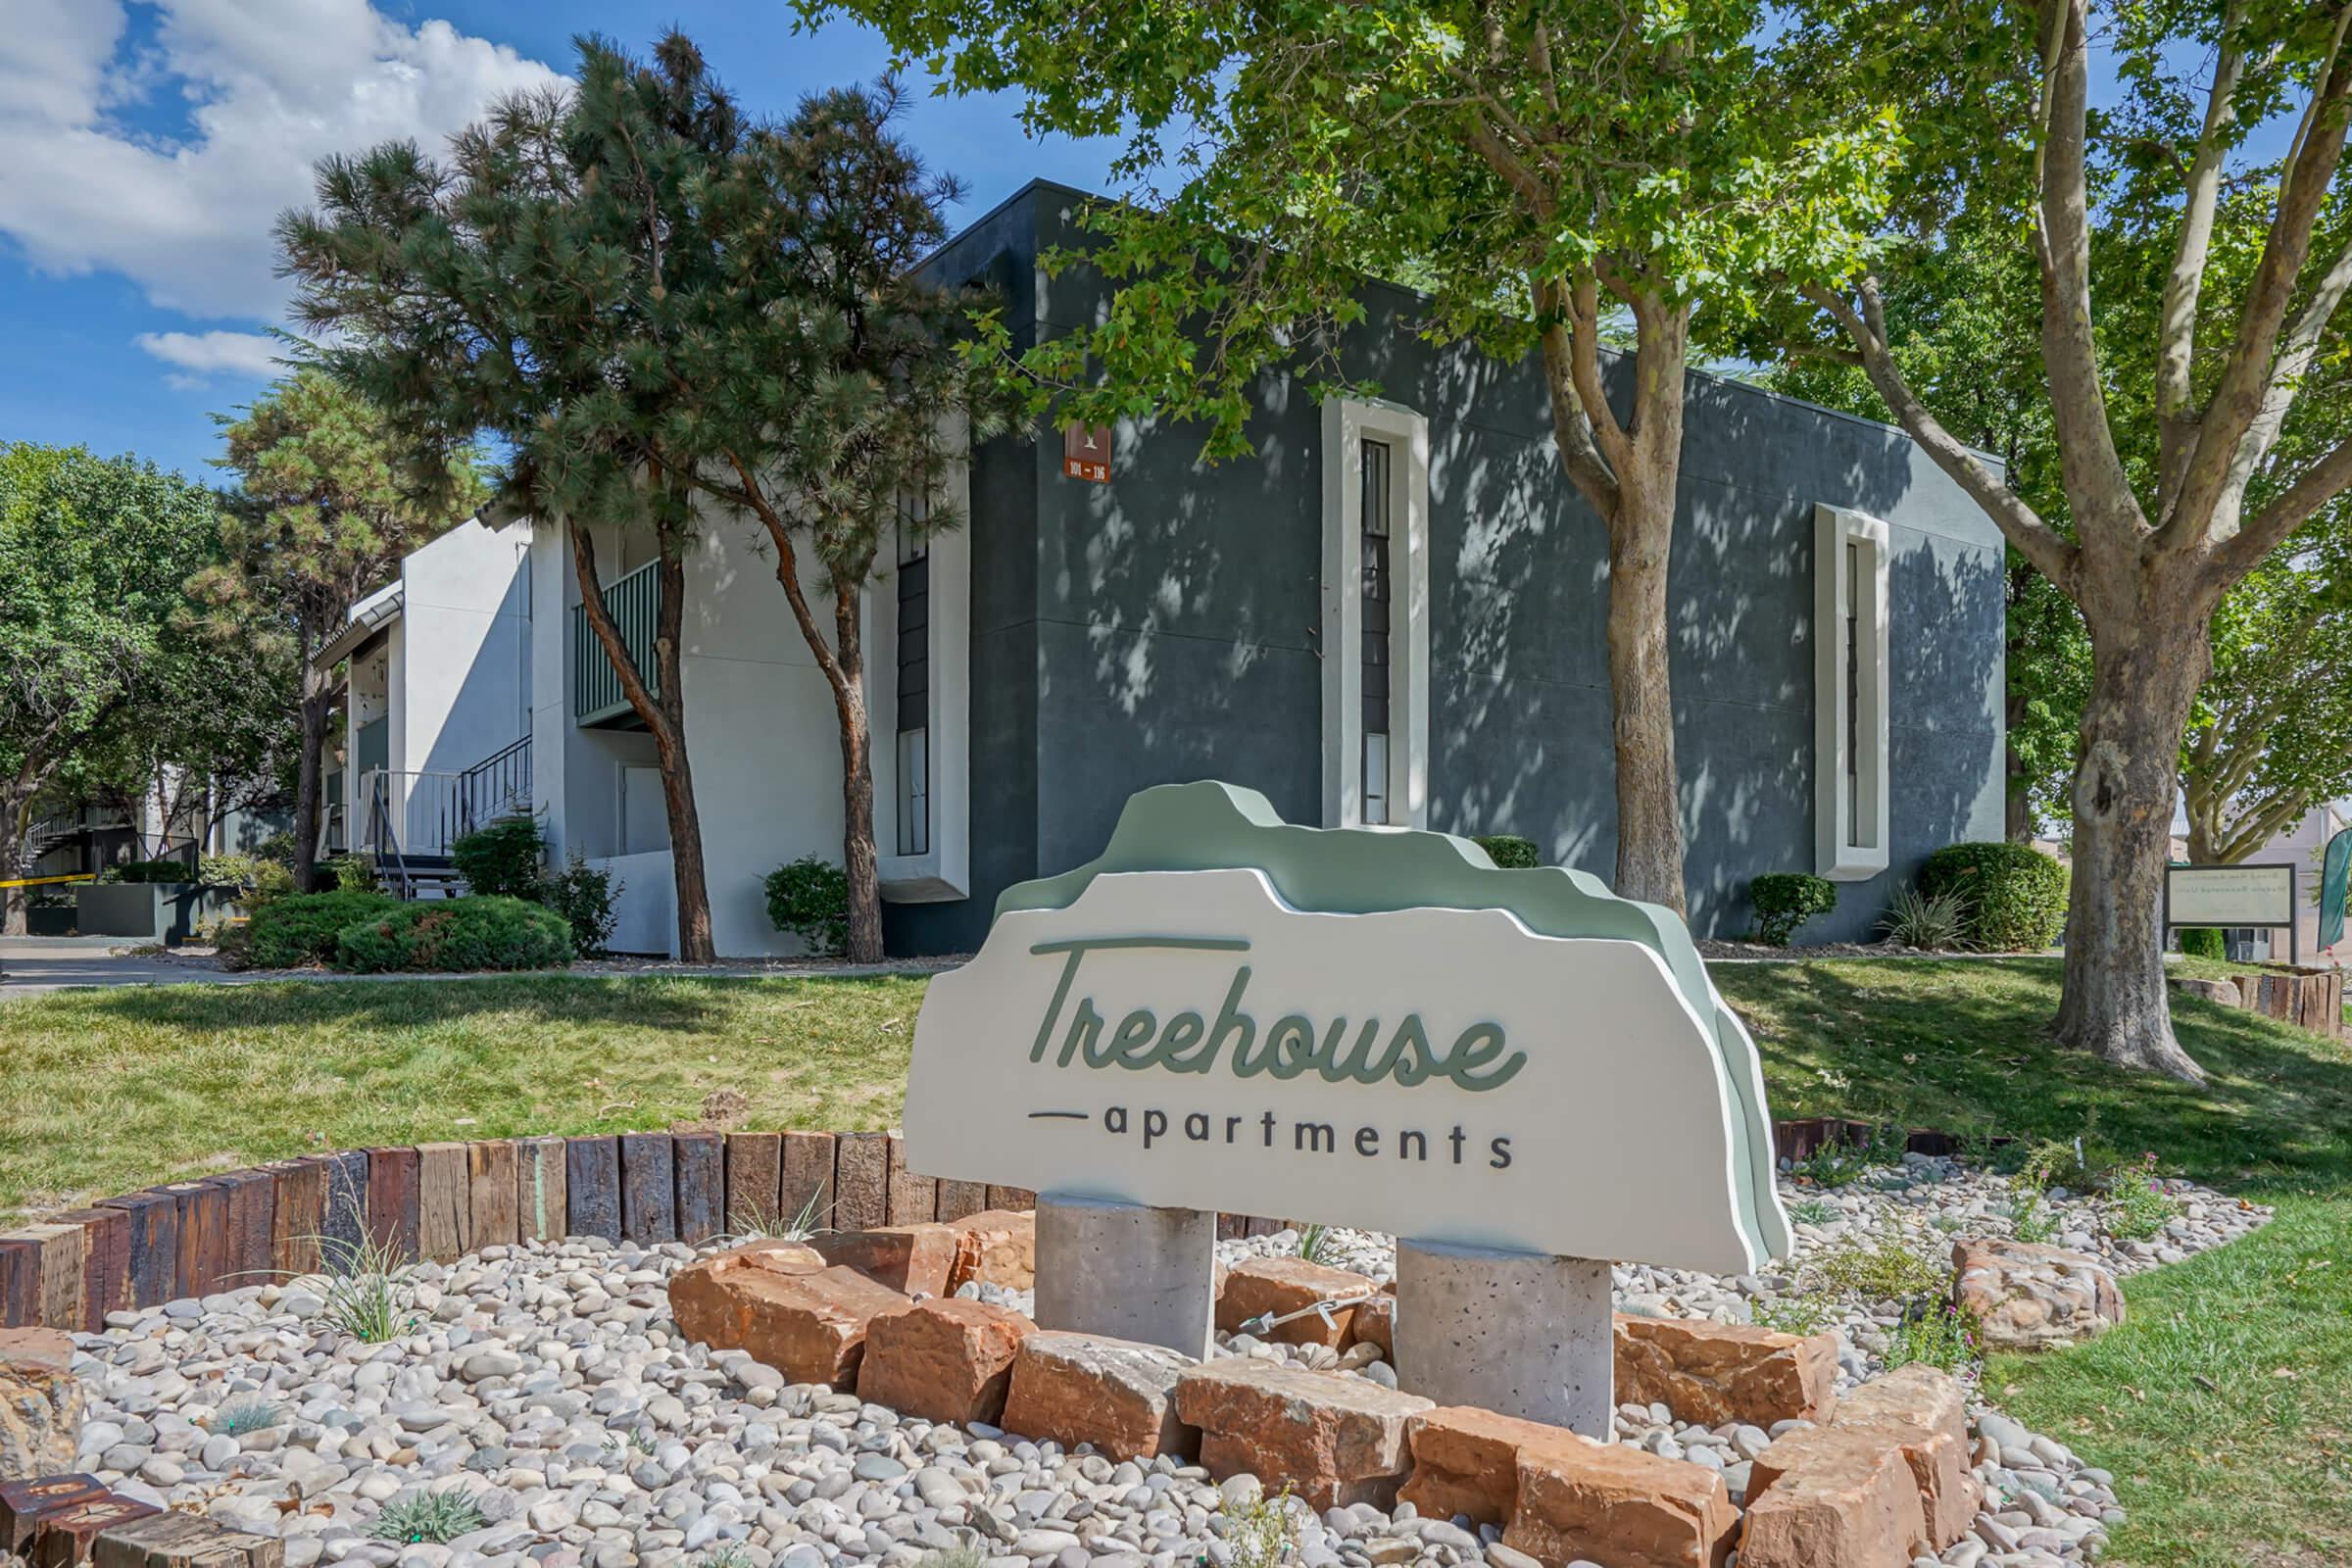 Treehouse Apartments Exterior - Treehouse Apartments - Albuquerque - New Mexico